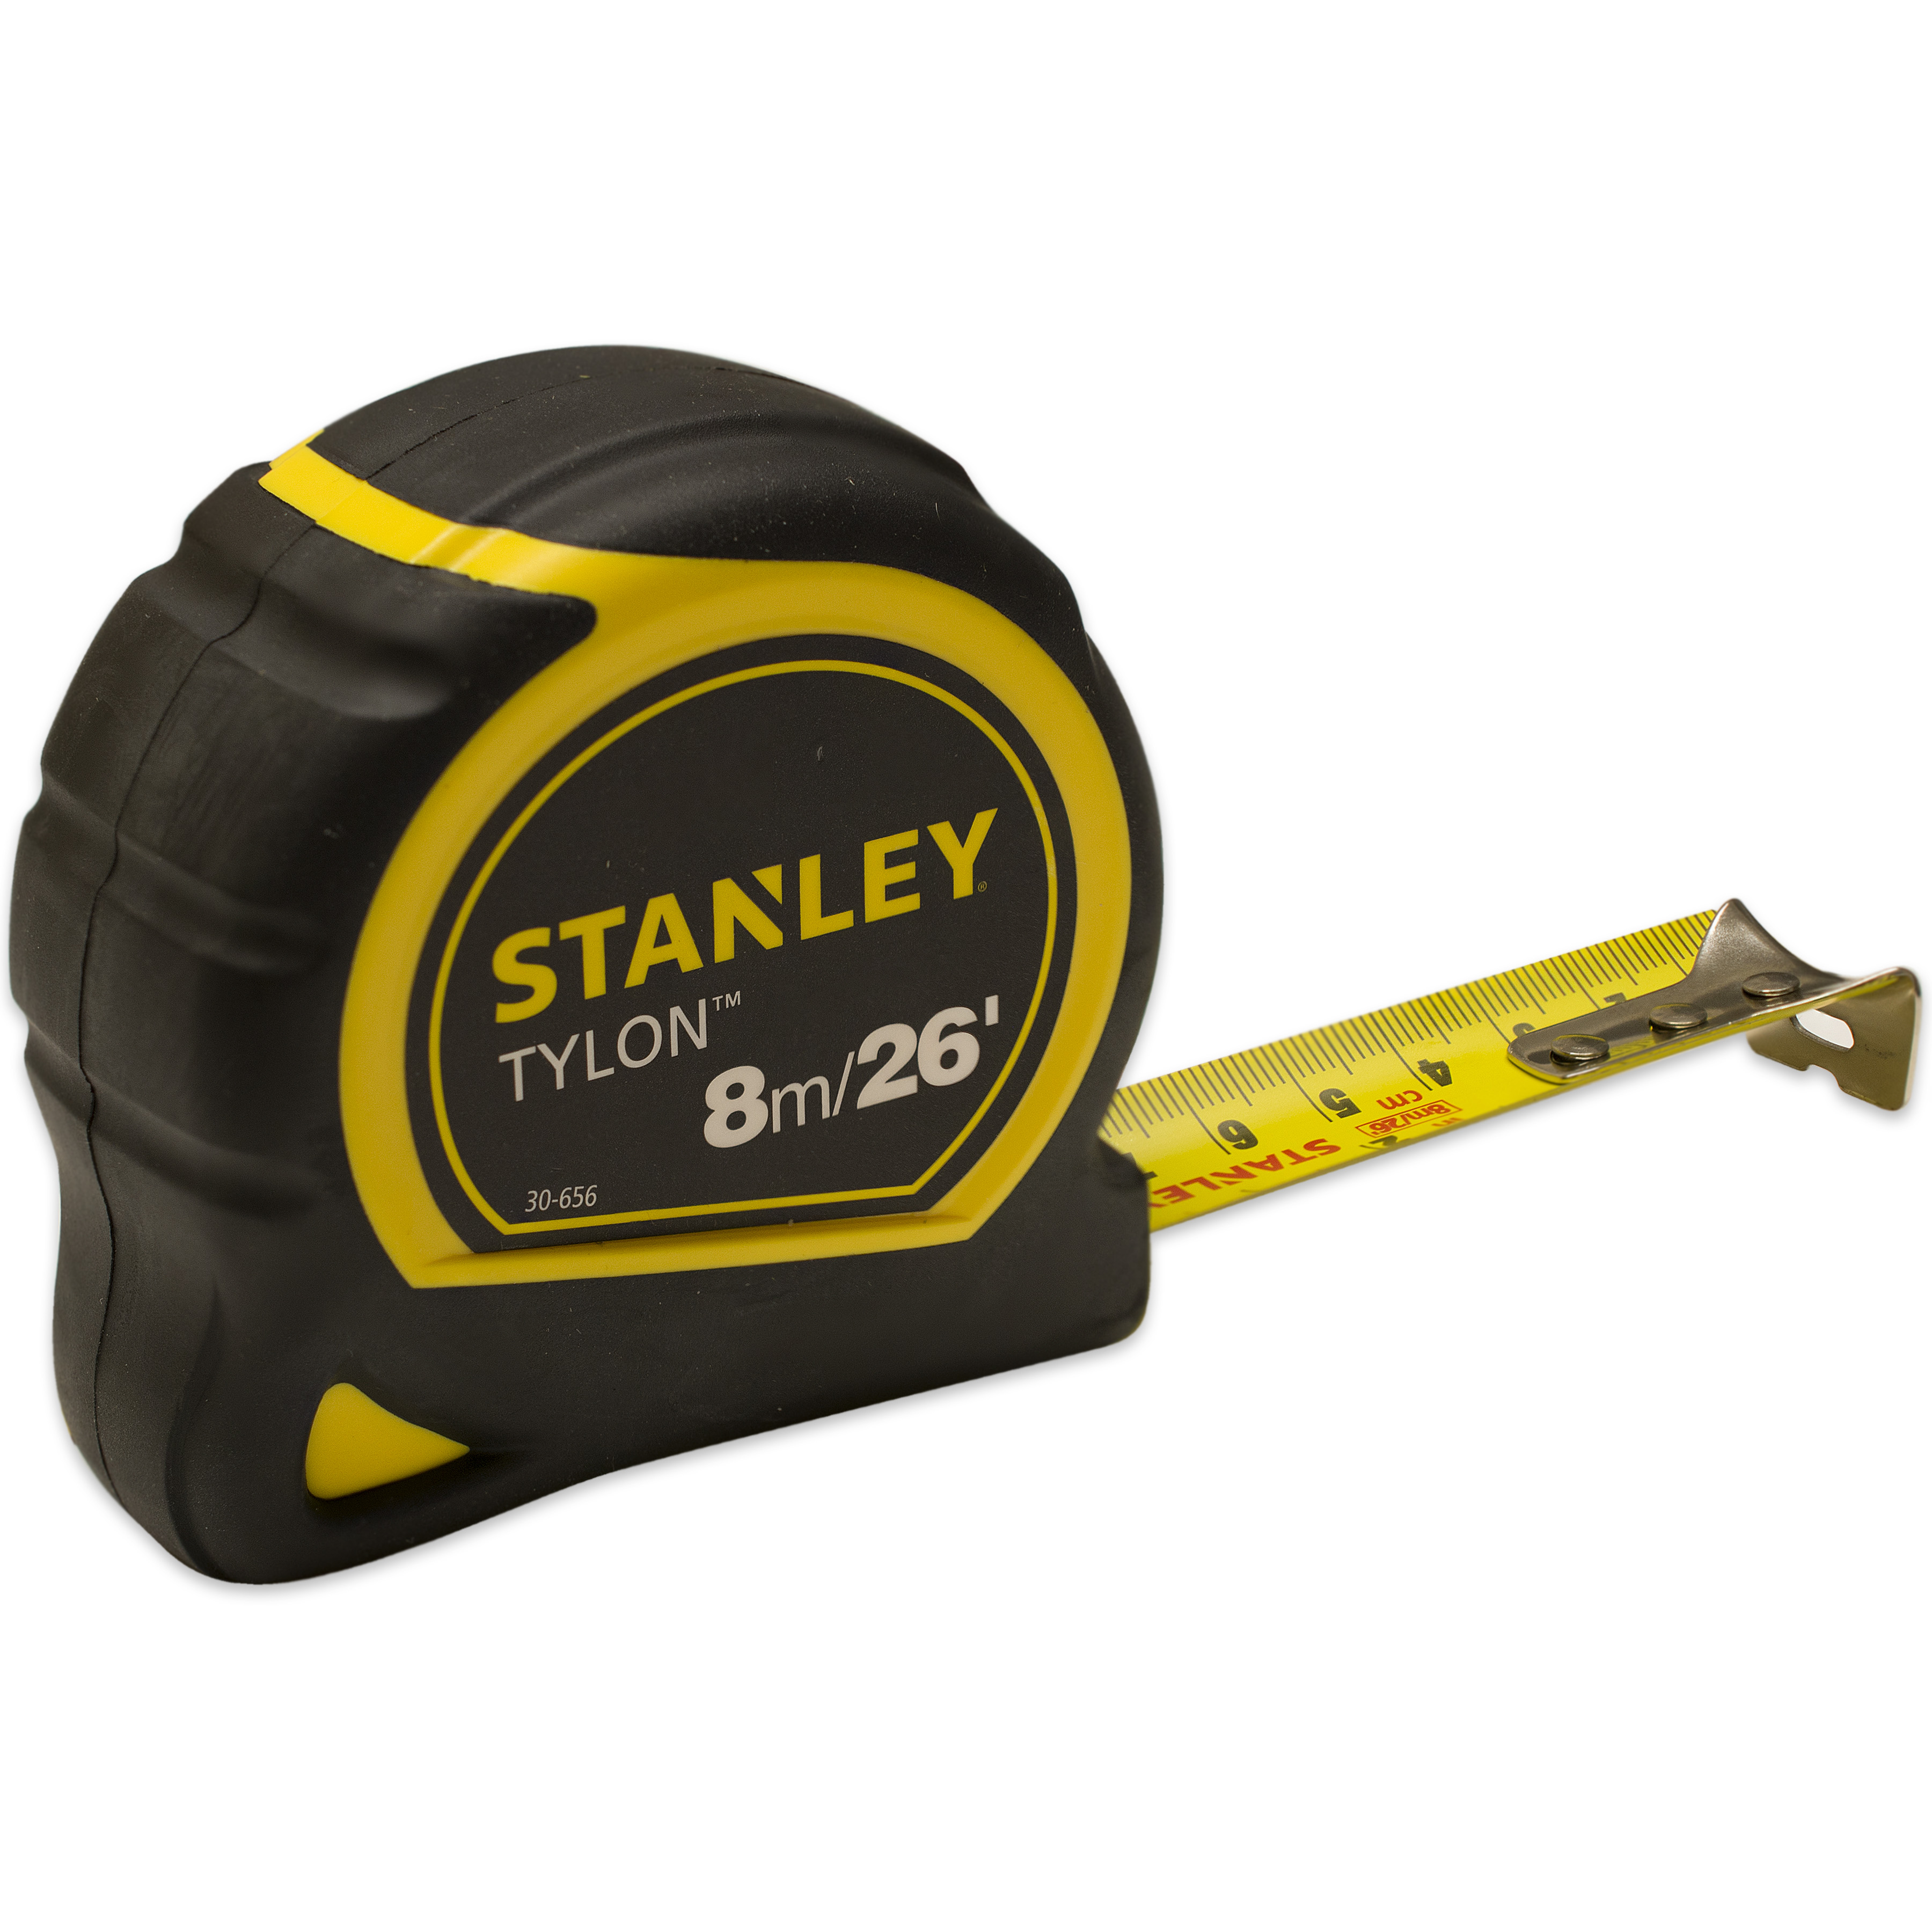 Stanley Tape Measure 3m Tylon Metric Only 